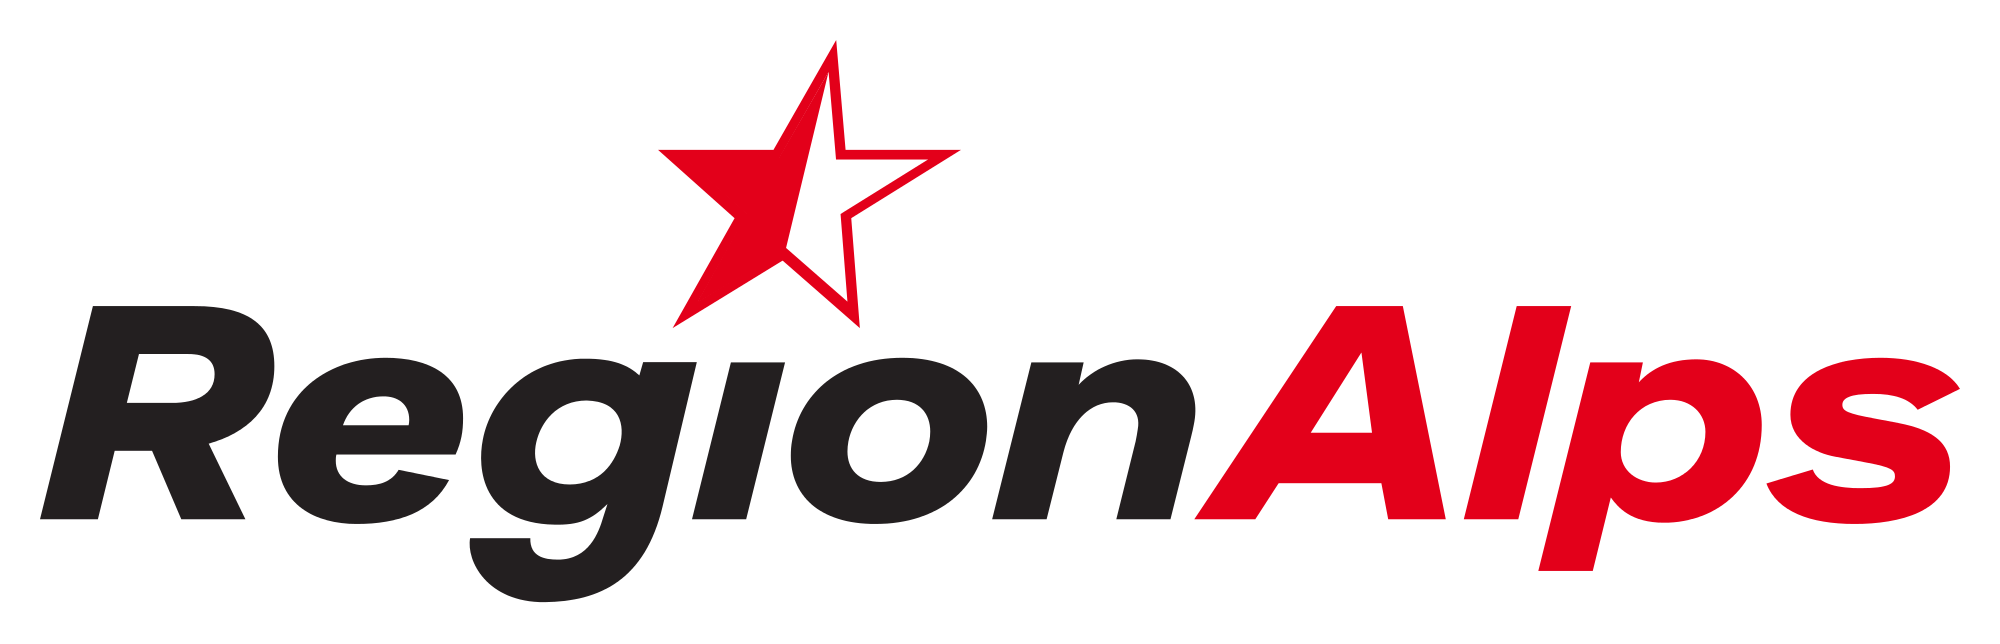 Logo Regionalps